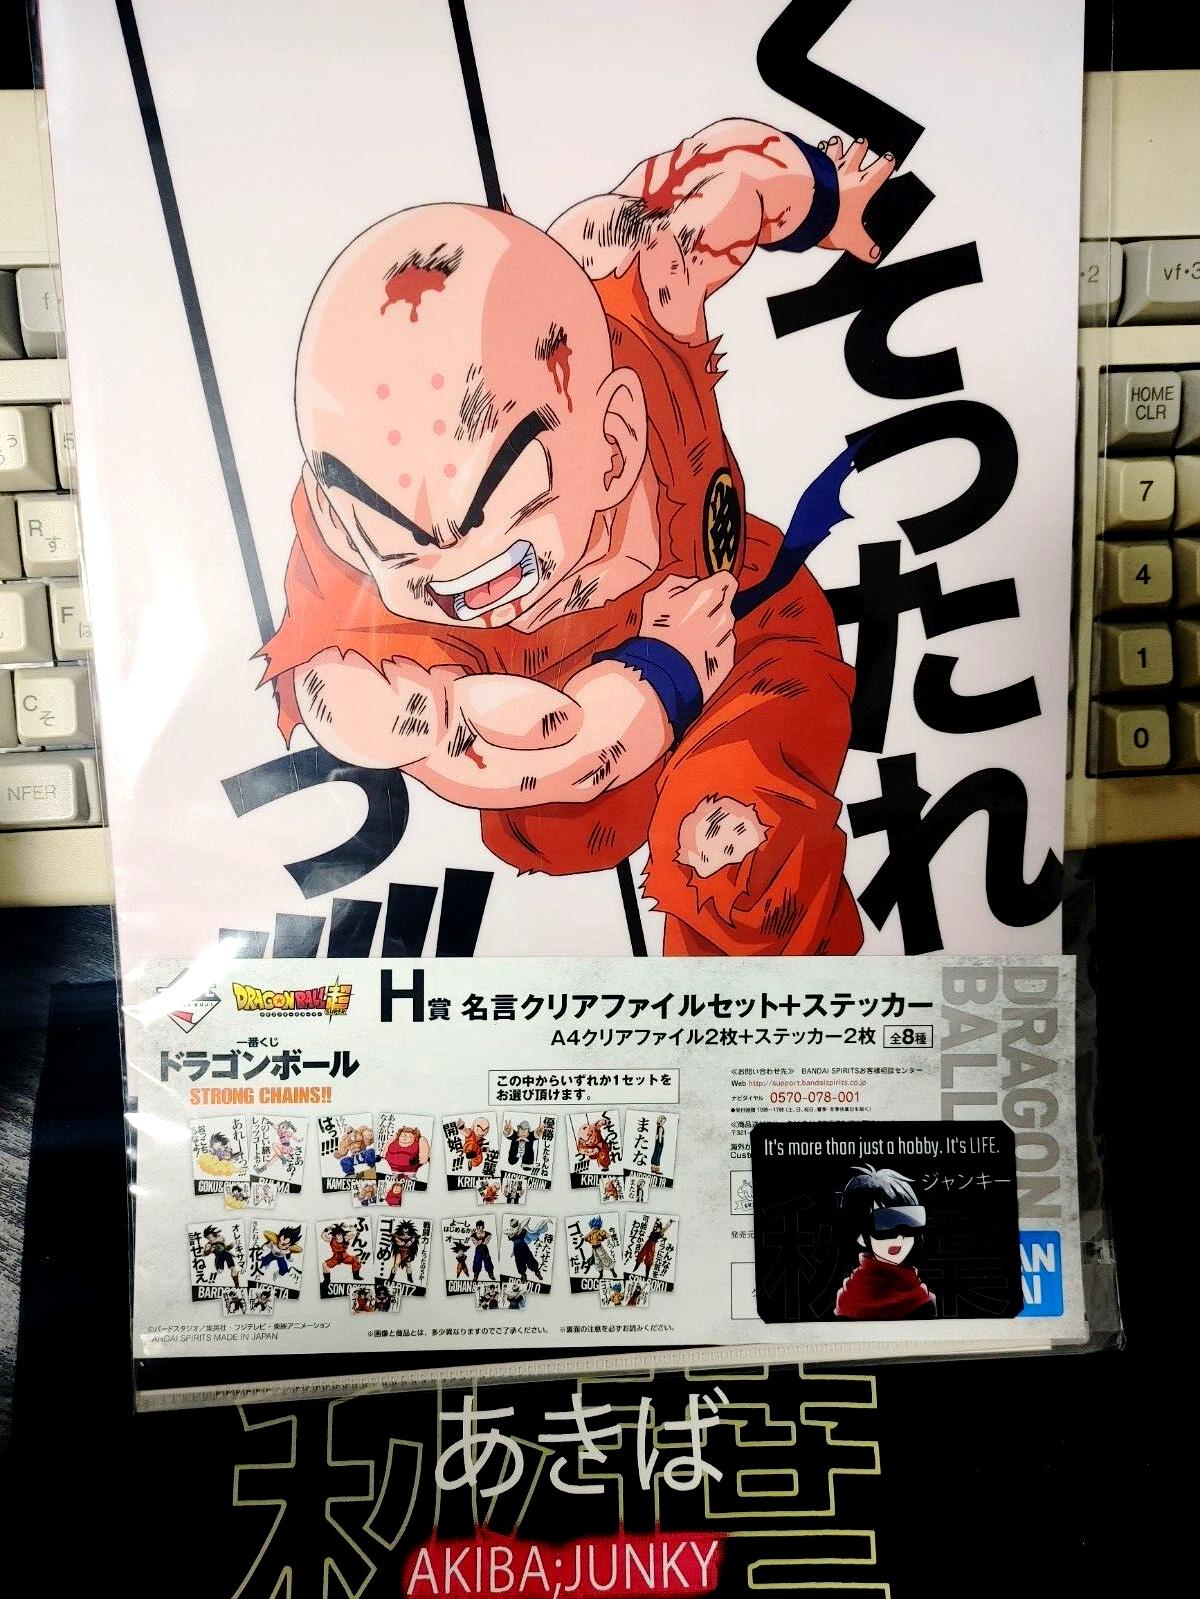 Anime Dragon ball Animation Design Files Android 18 Krillin Japan Limited